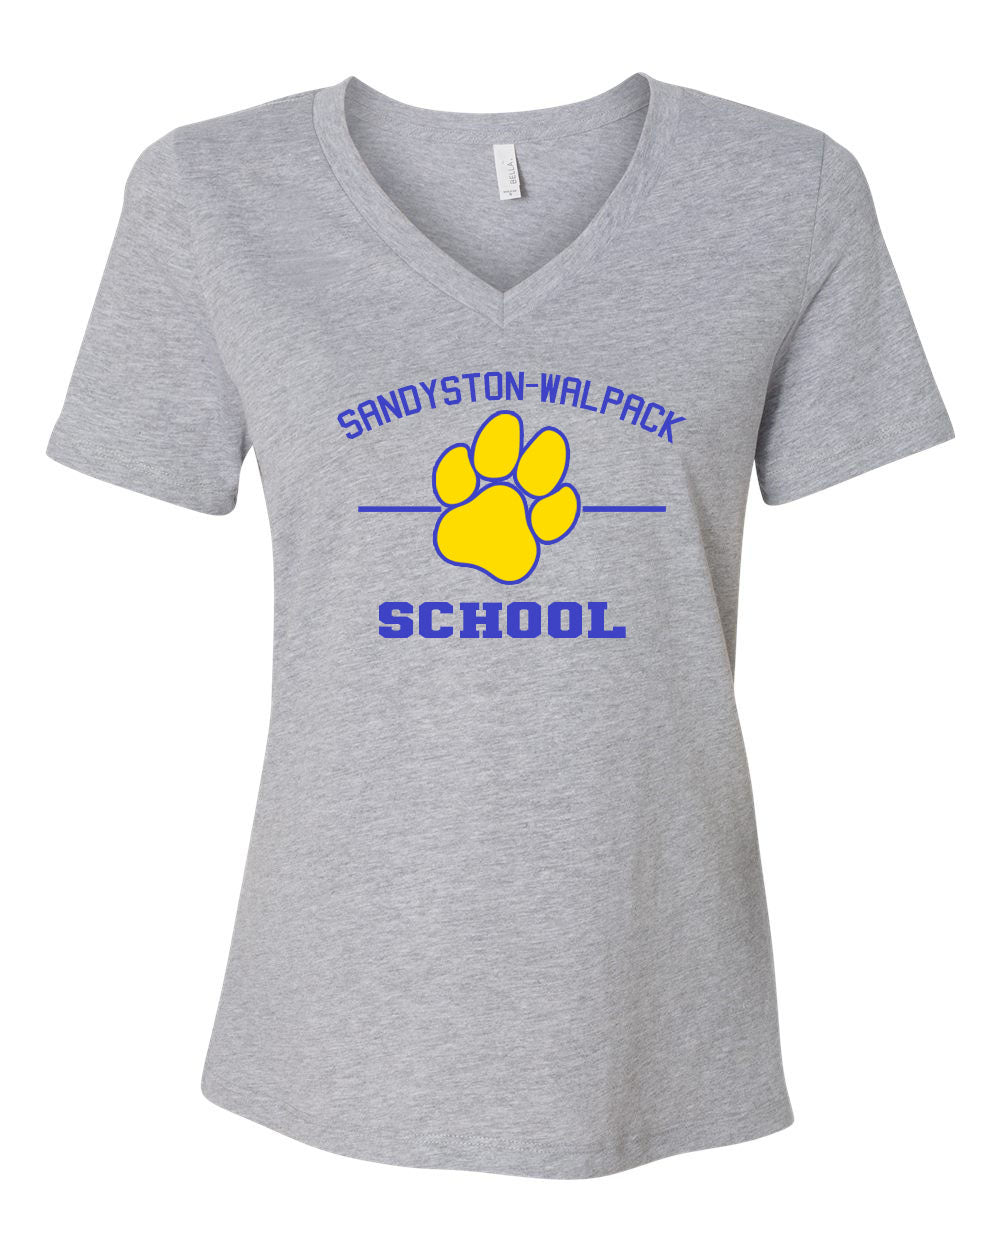 Sandyston Walpack School V-neck T-shirt